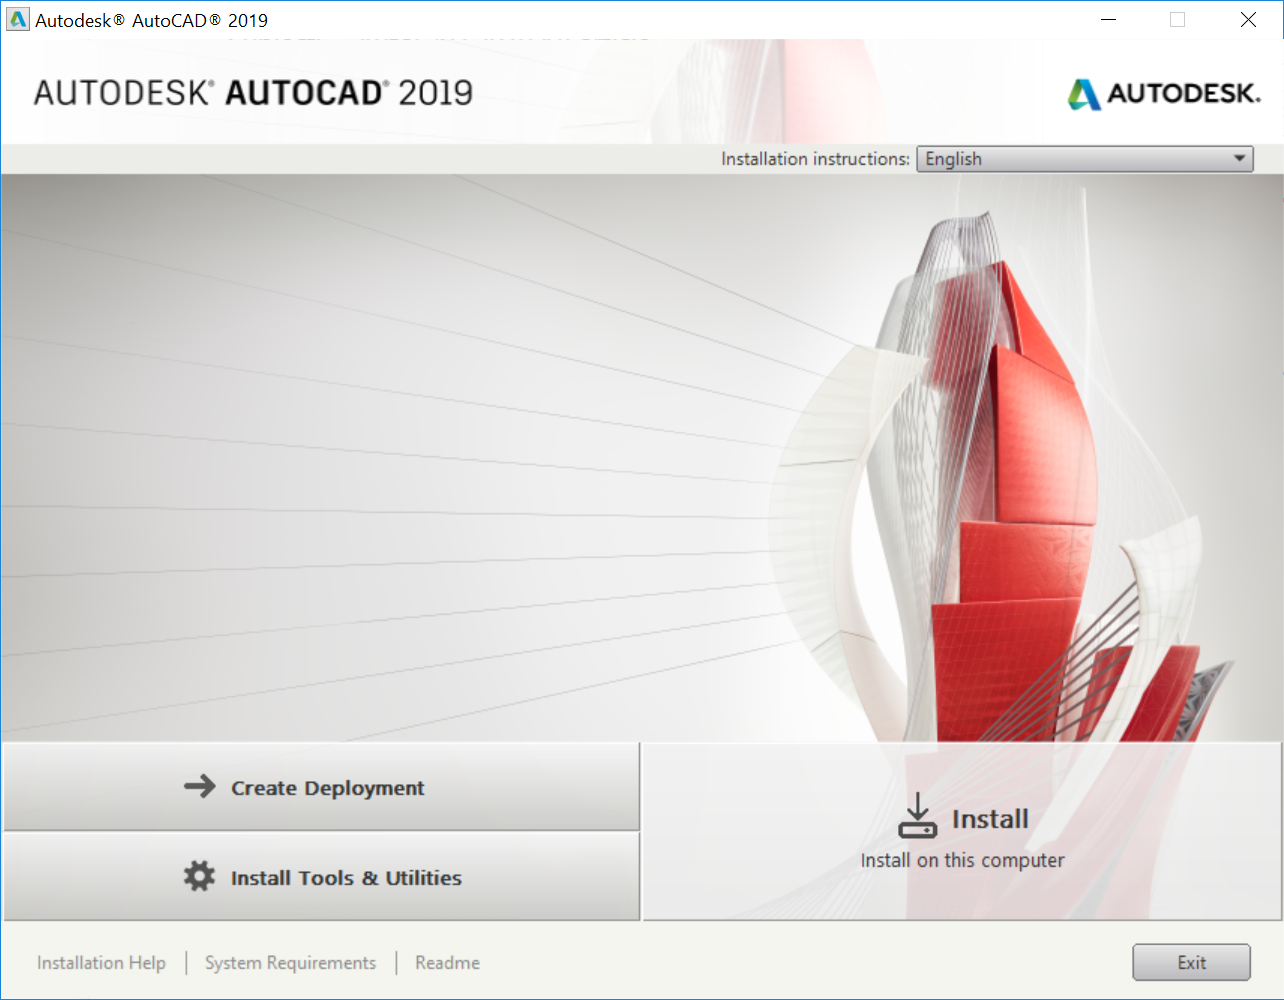 Autodesk Autocad 19 Applications